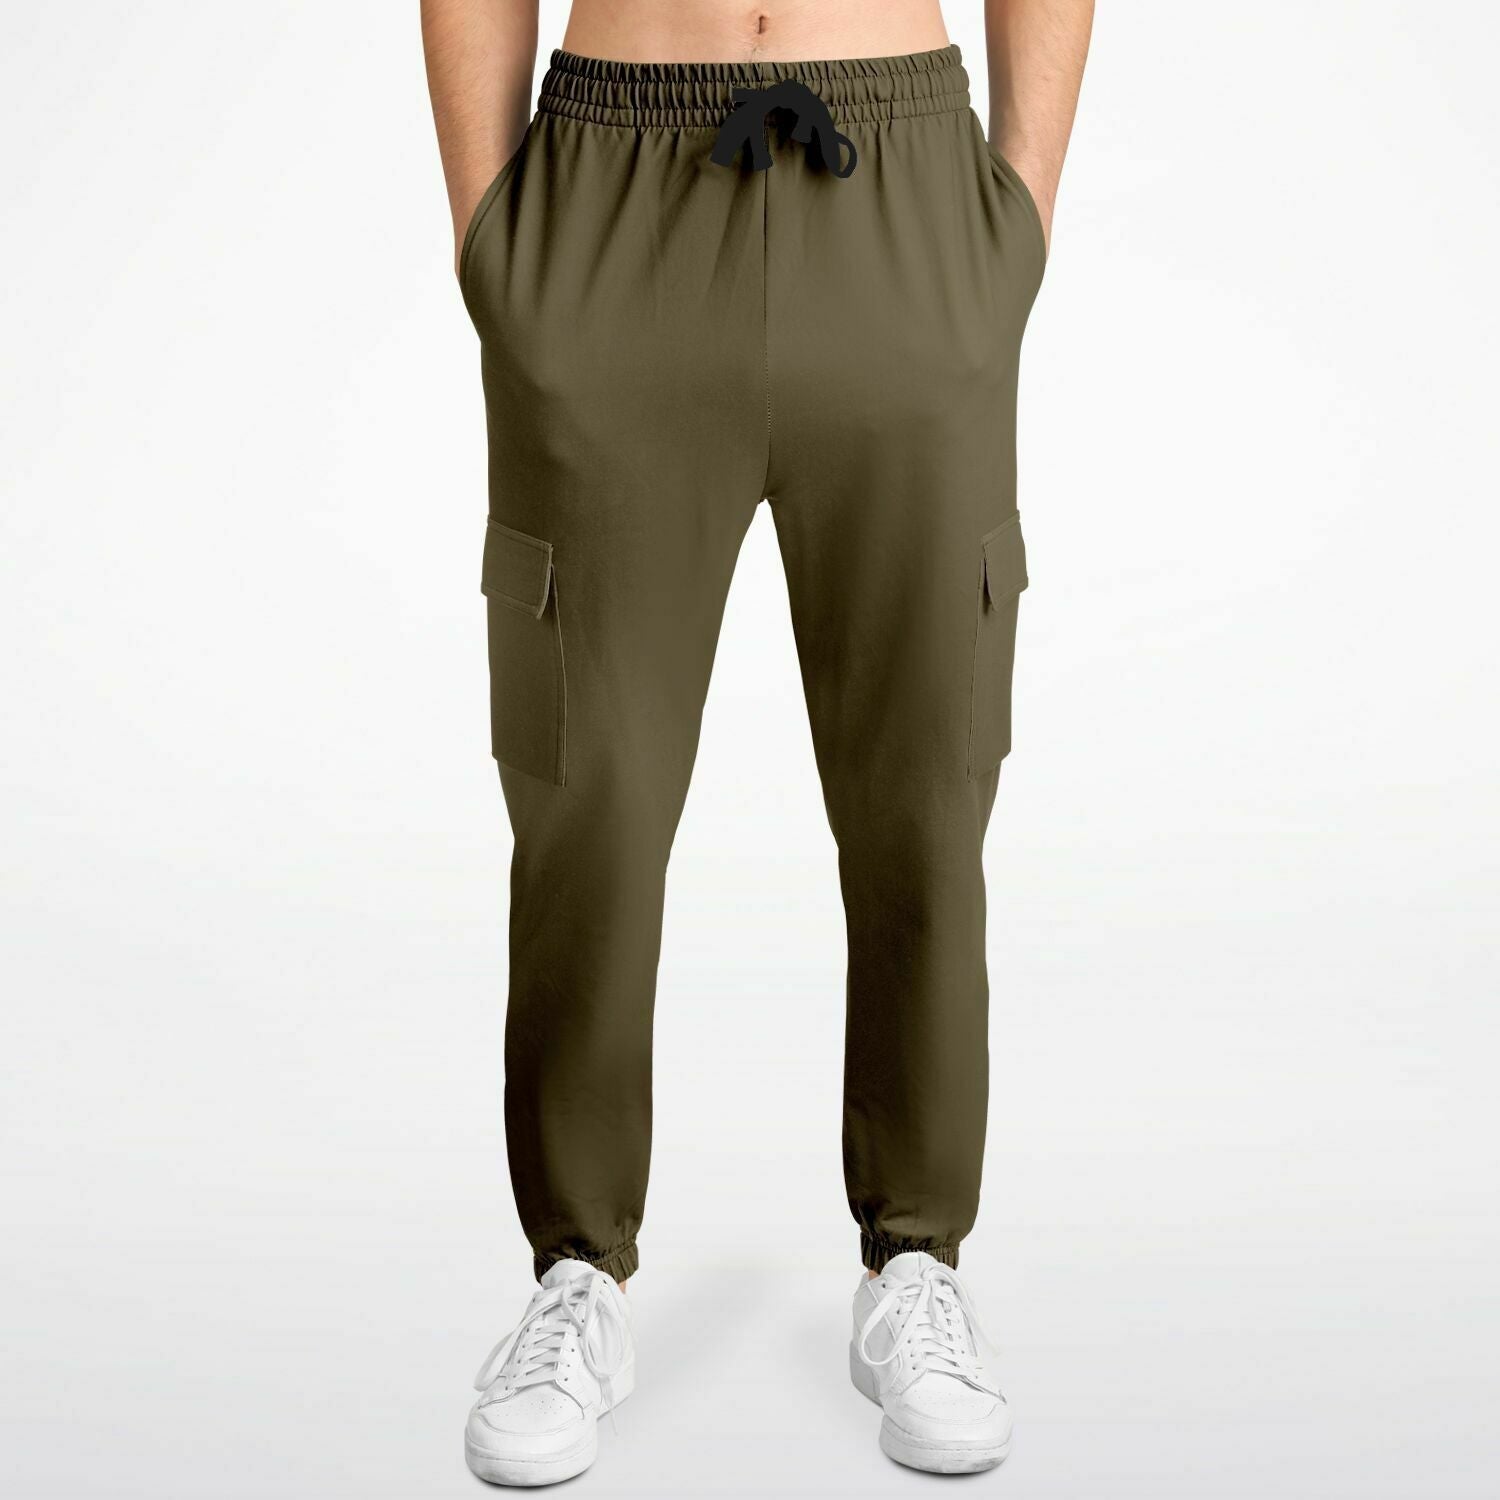 Gym Ready Cargo Sweatpants - Military Green / XS - Sport Finesse